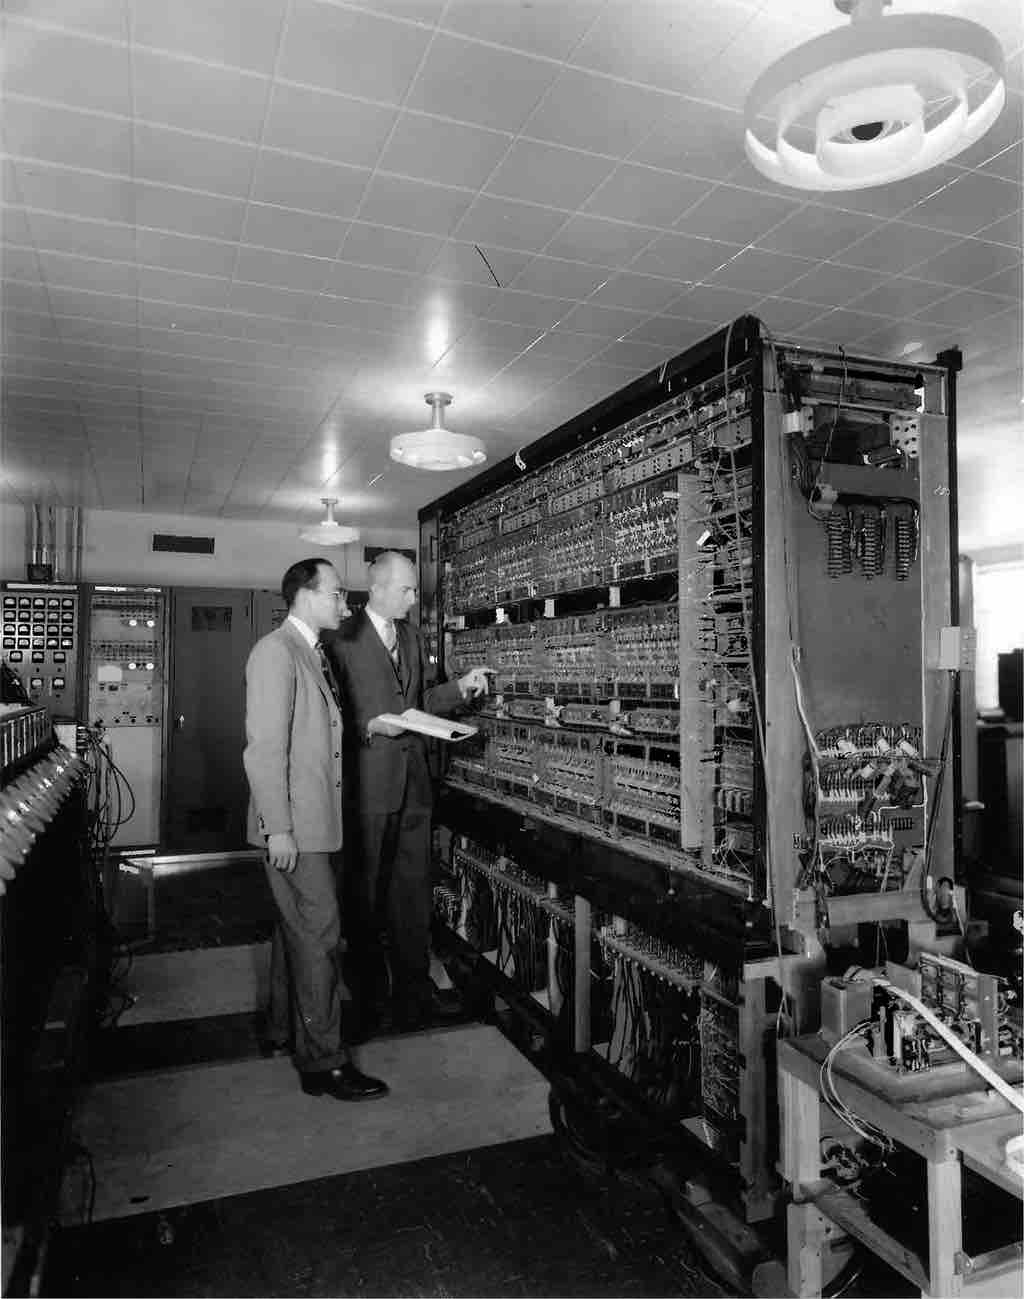 AVIDAC, one of the earliest digital computers, in 1953.